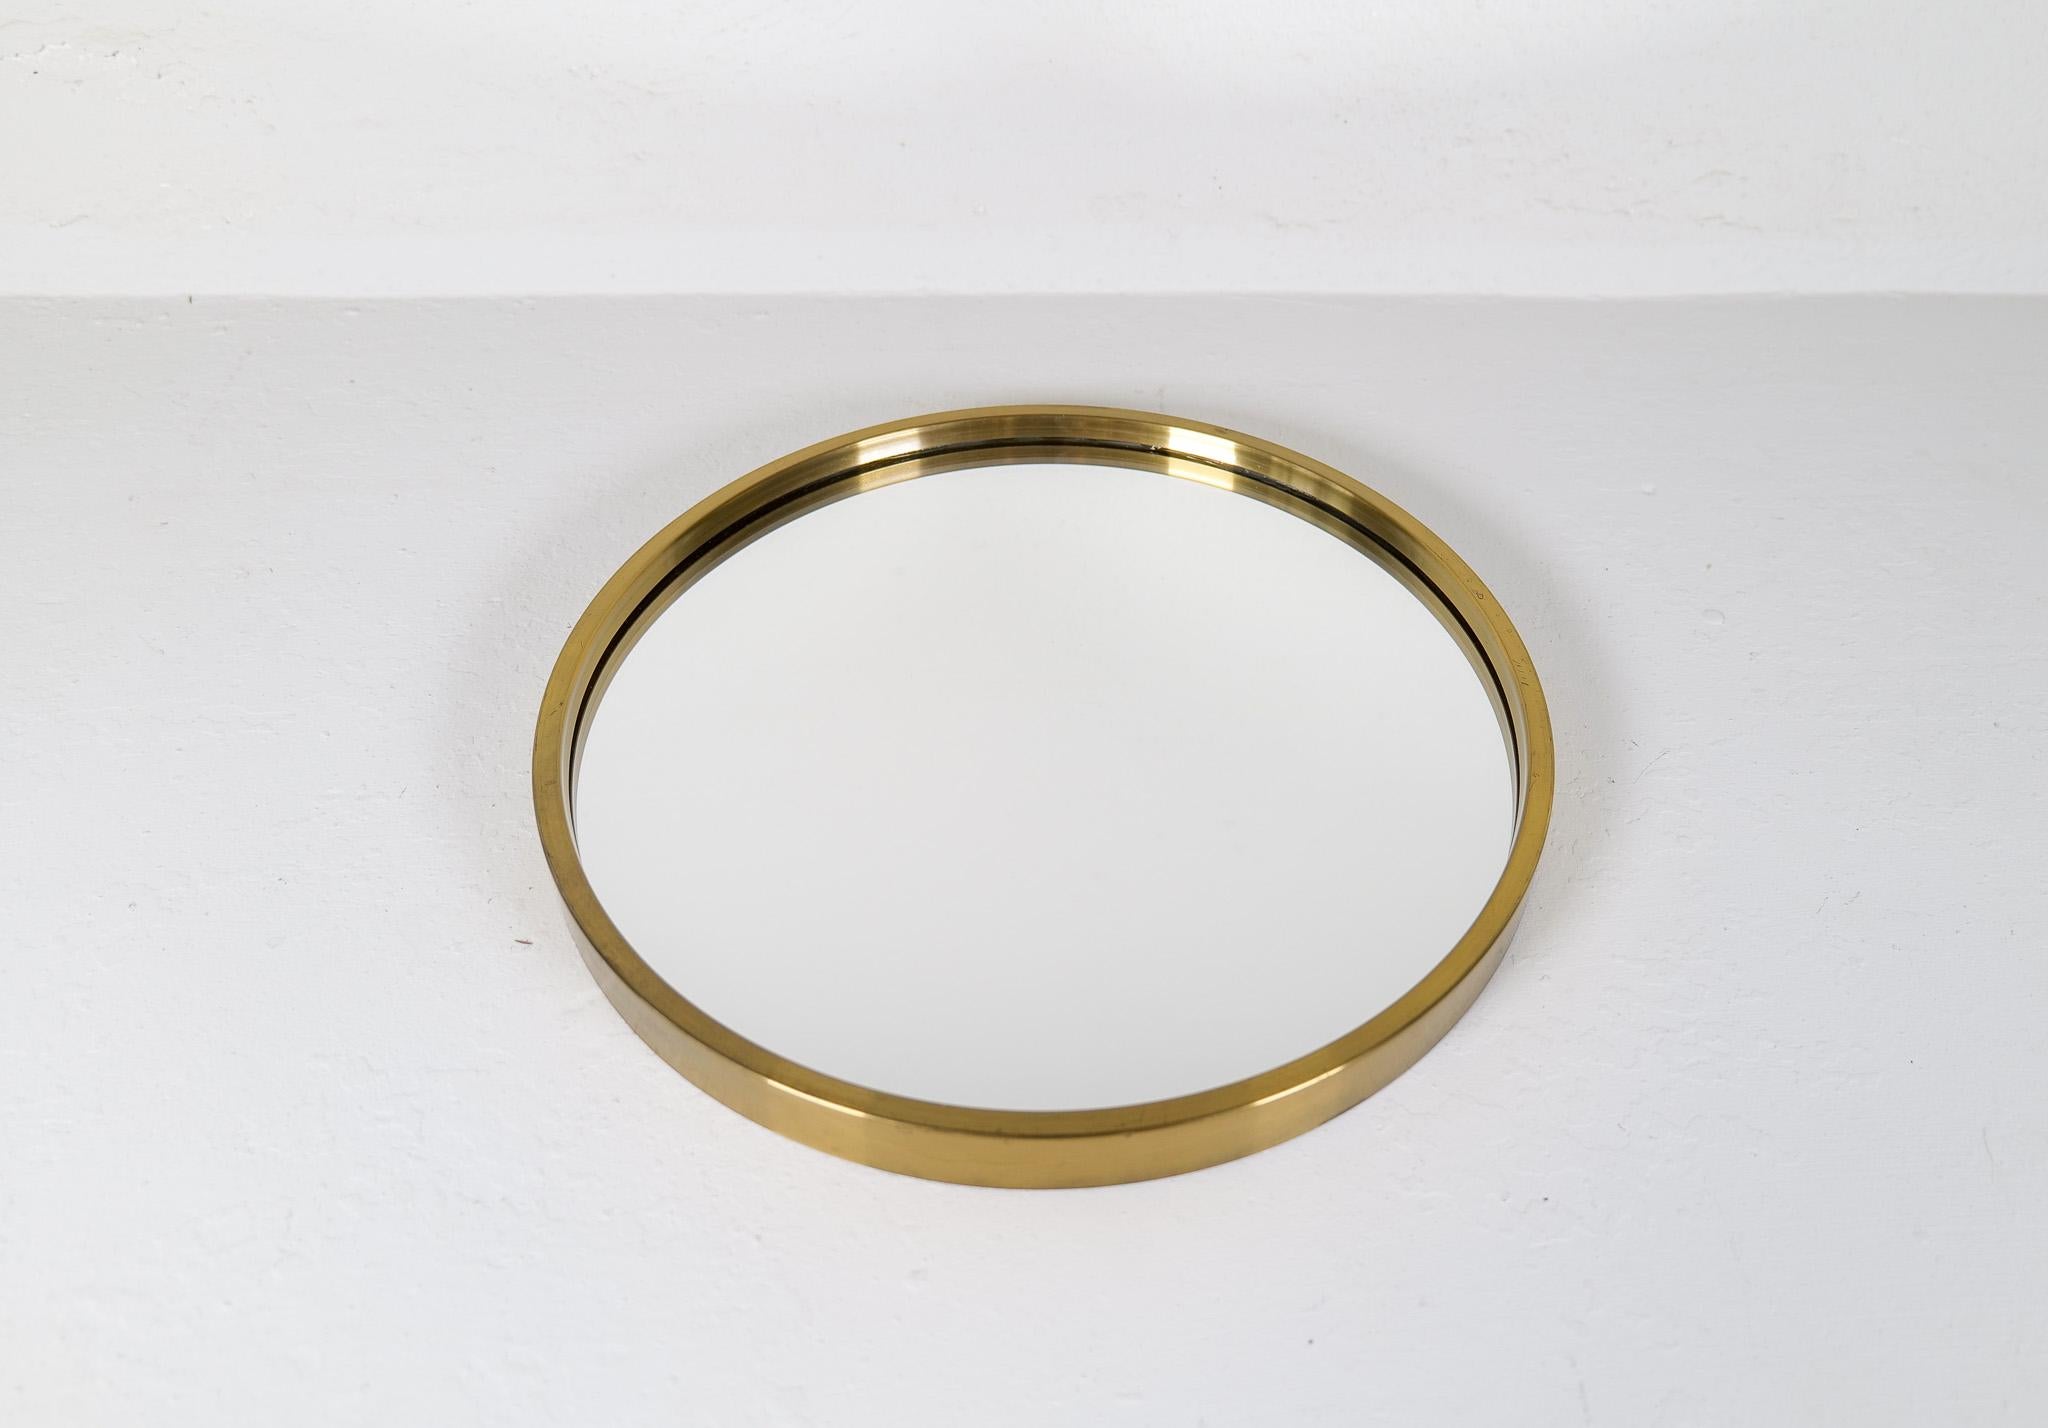 Midcentury Modern Rounded Brass Mirror by Glasmäster in Markaryd, Sweden, 1960s For Sale 1